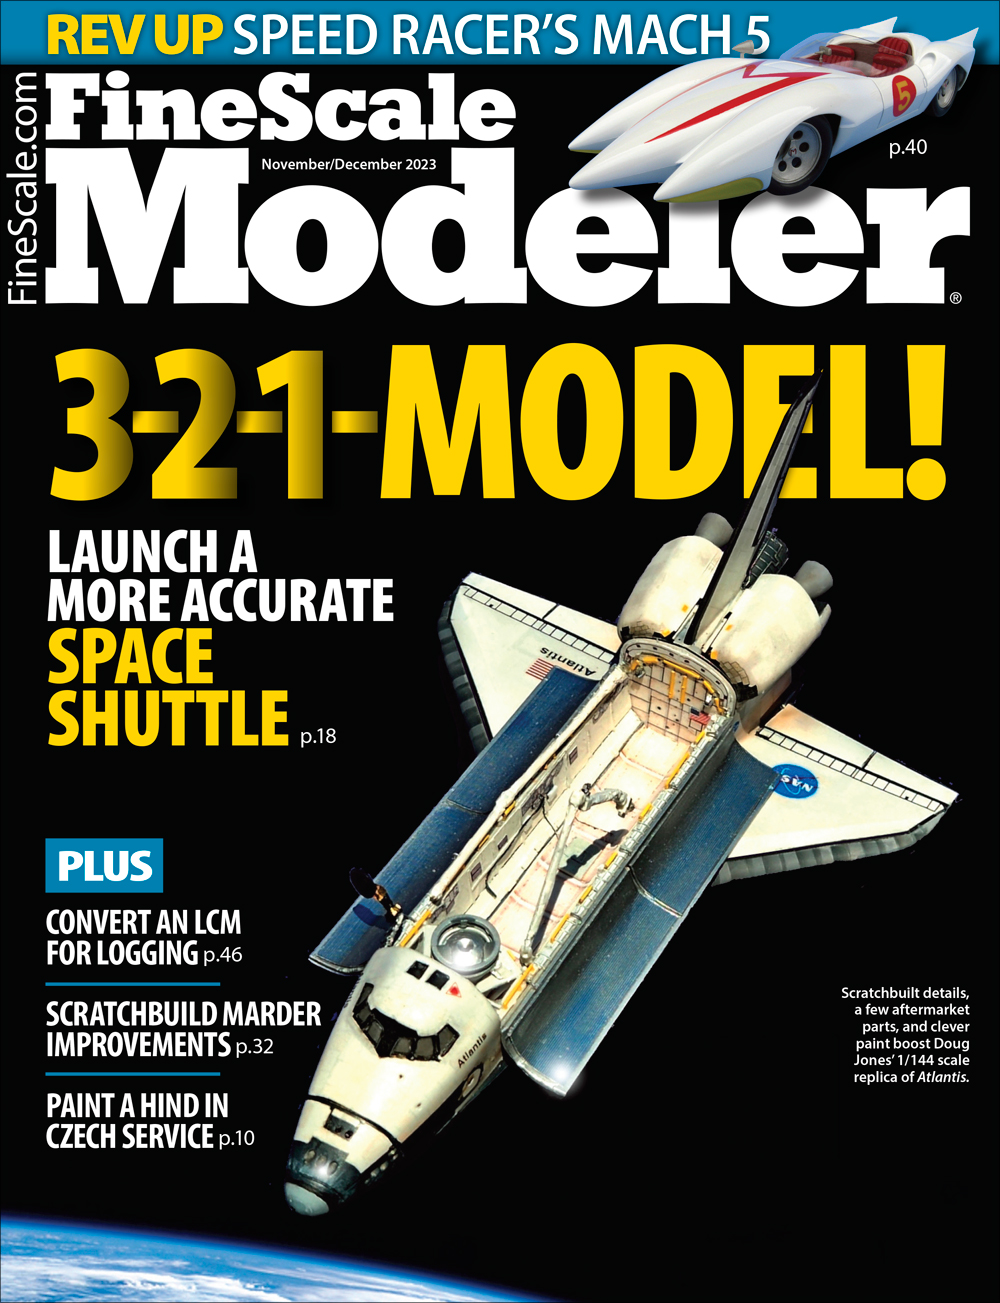 BUZZ BOMB  Finescale Modeler Magazine